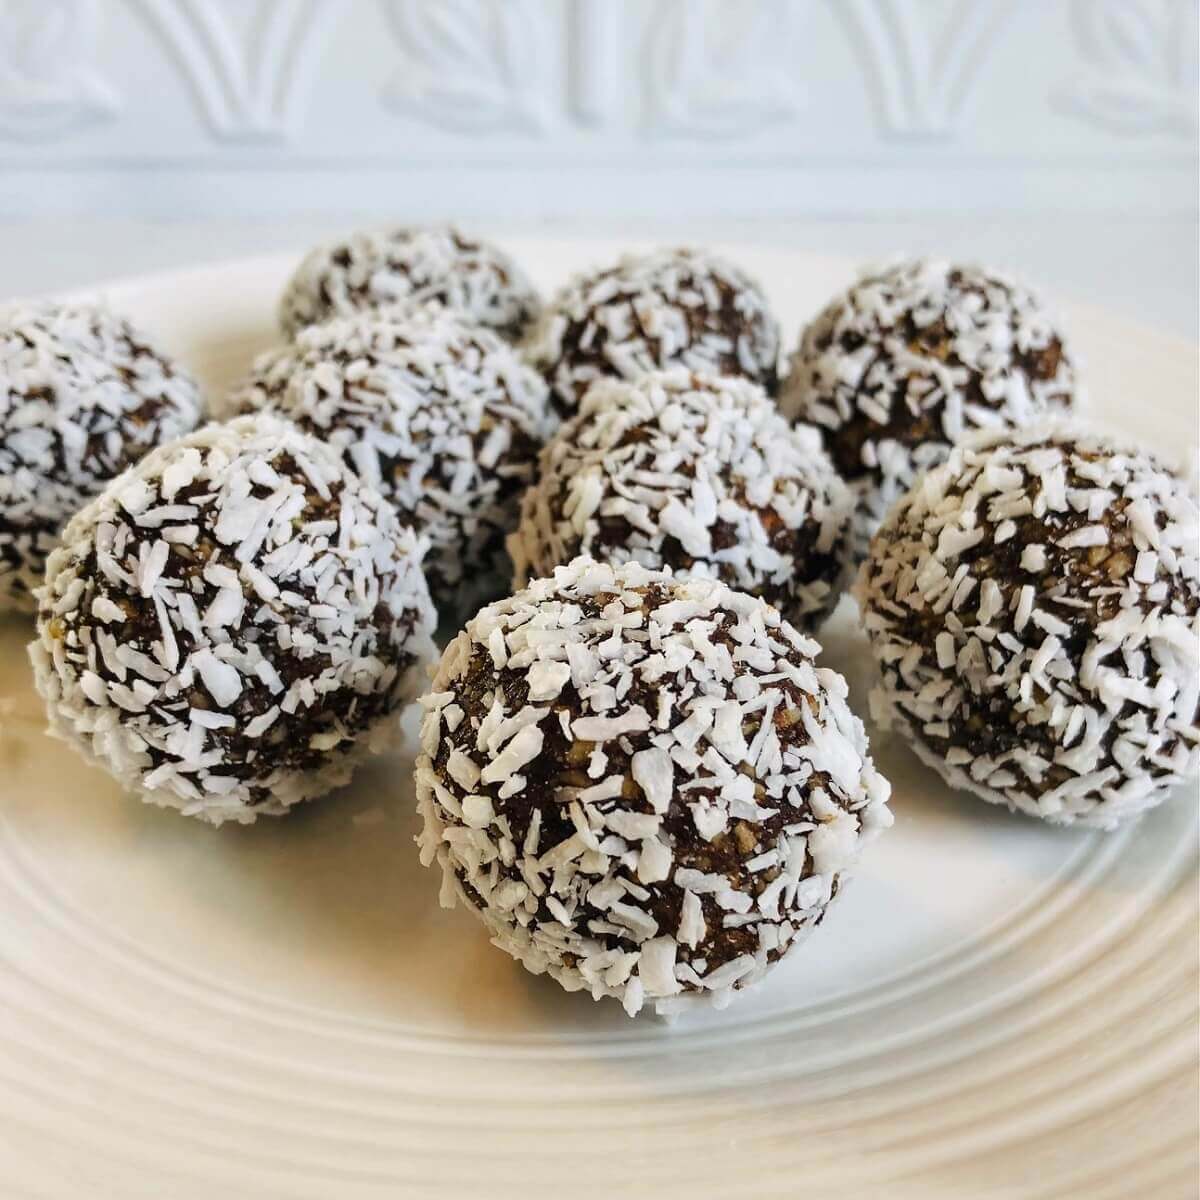 Chocolate Coconut Date Balls